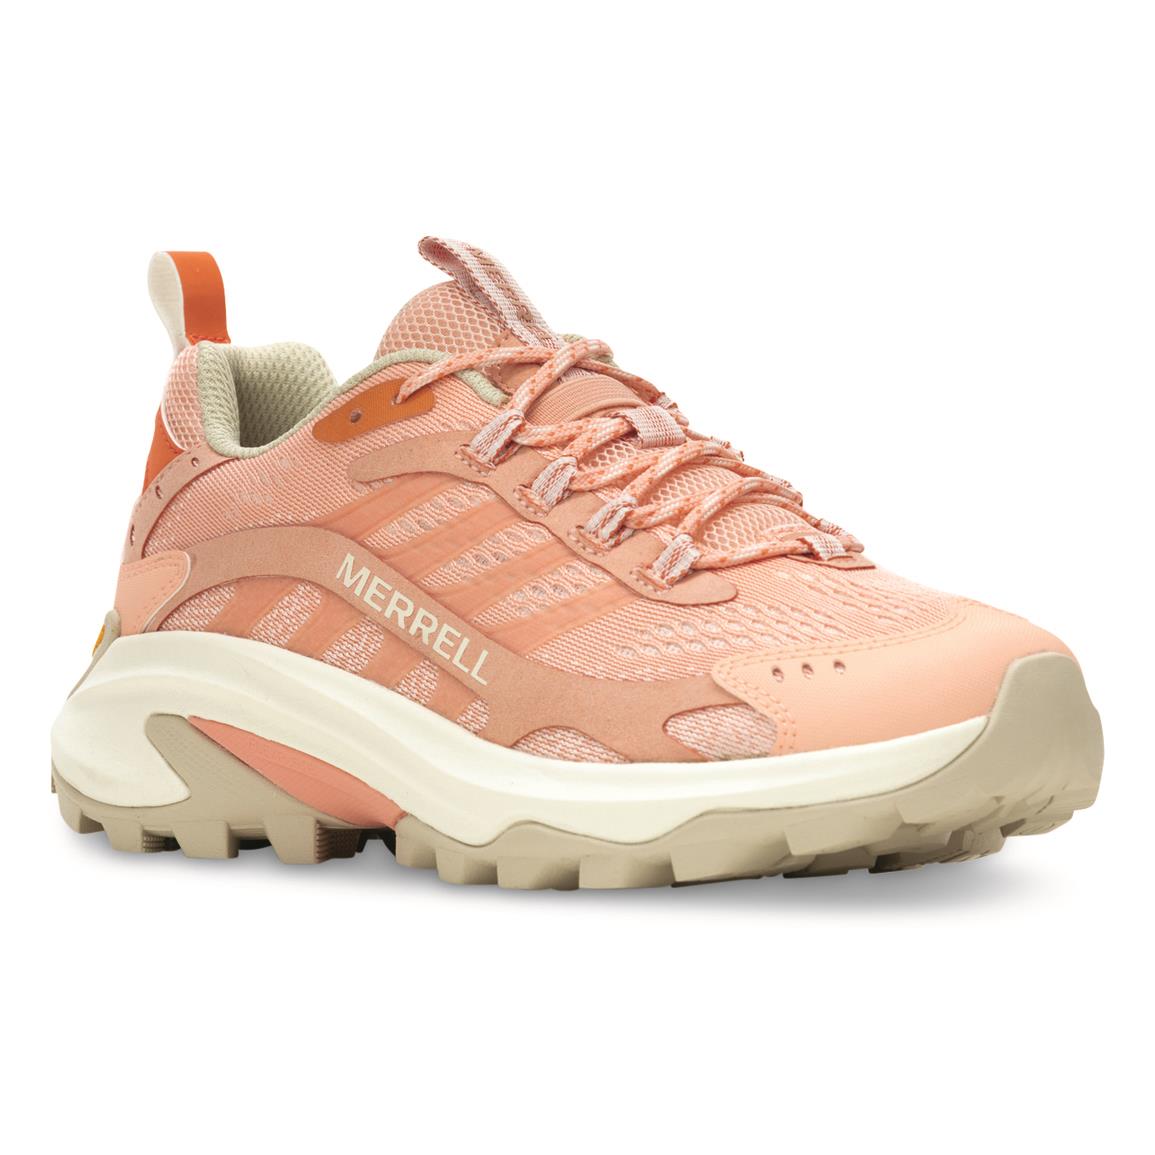 Merrell Women's MOAB Speed 2 Hiking Shoes, Peach